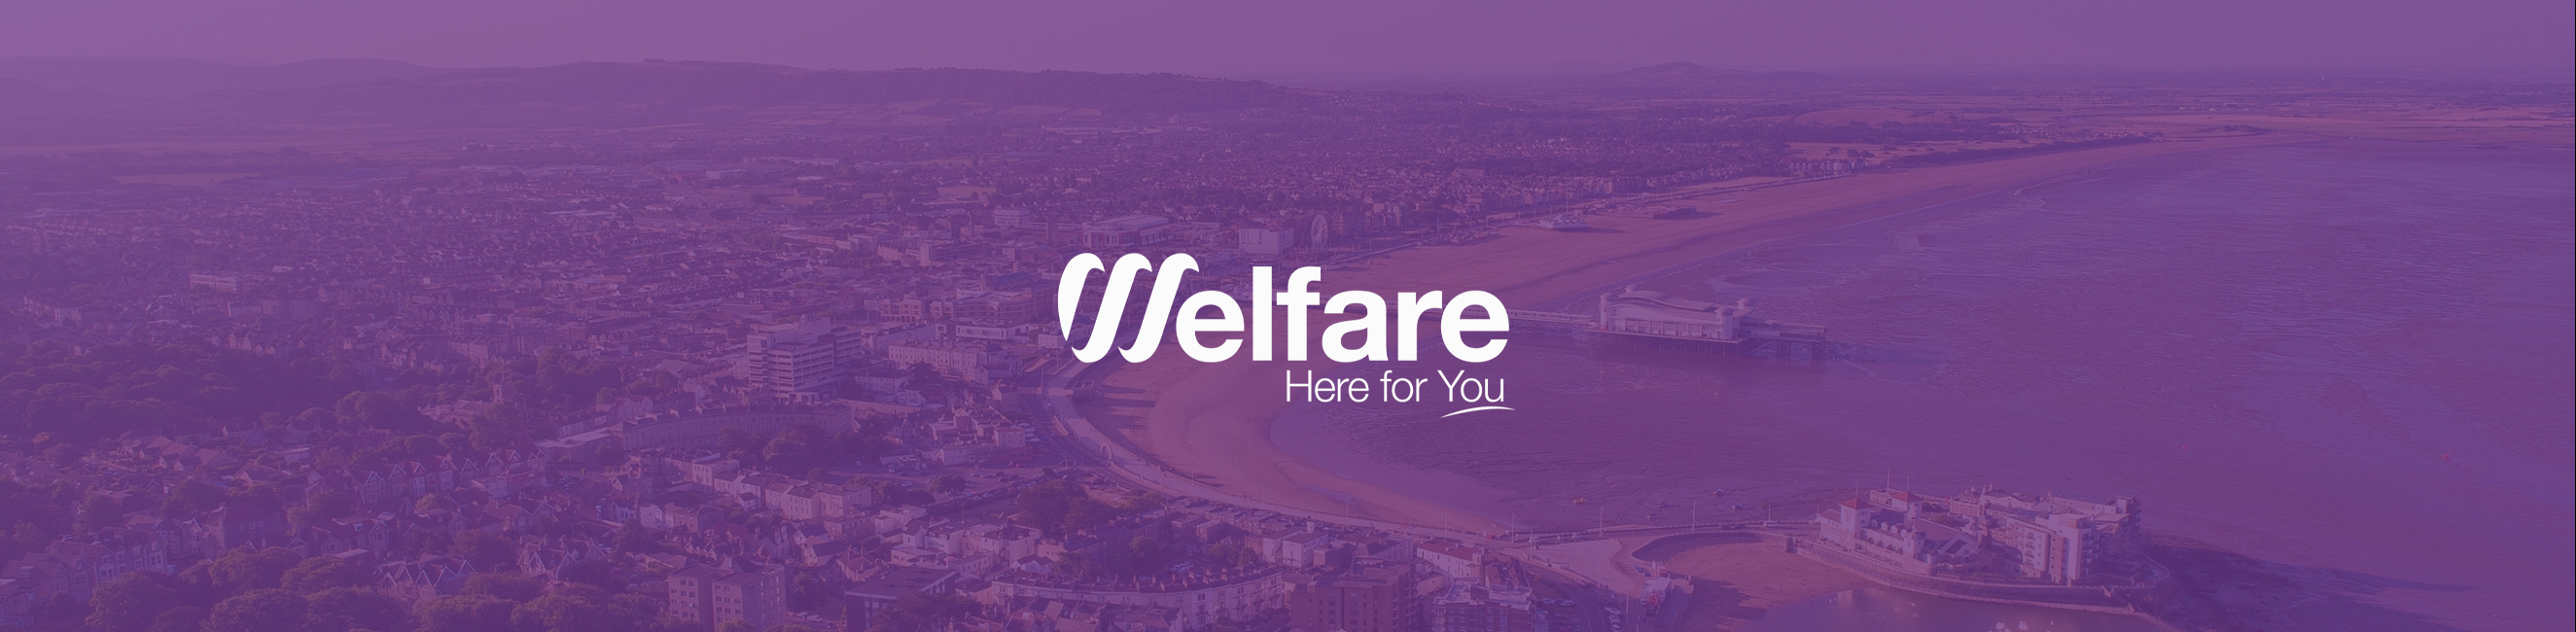 Welfare header